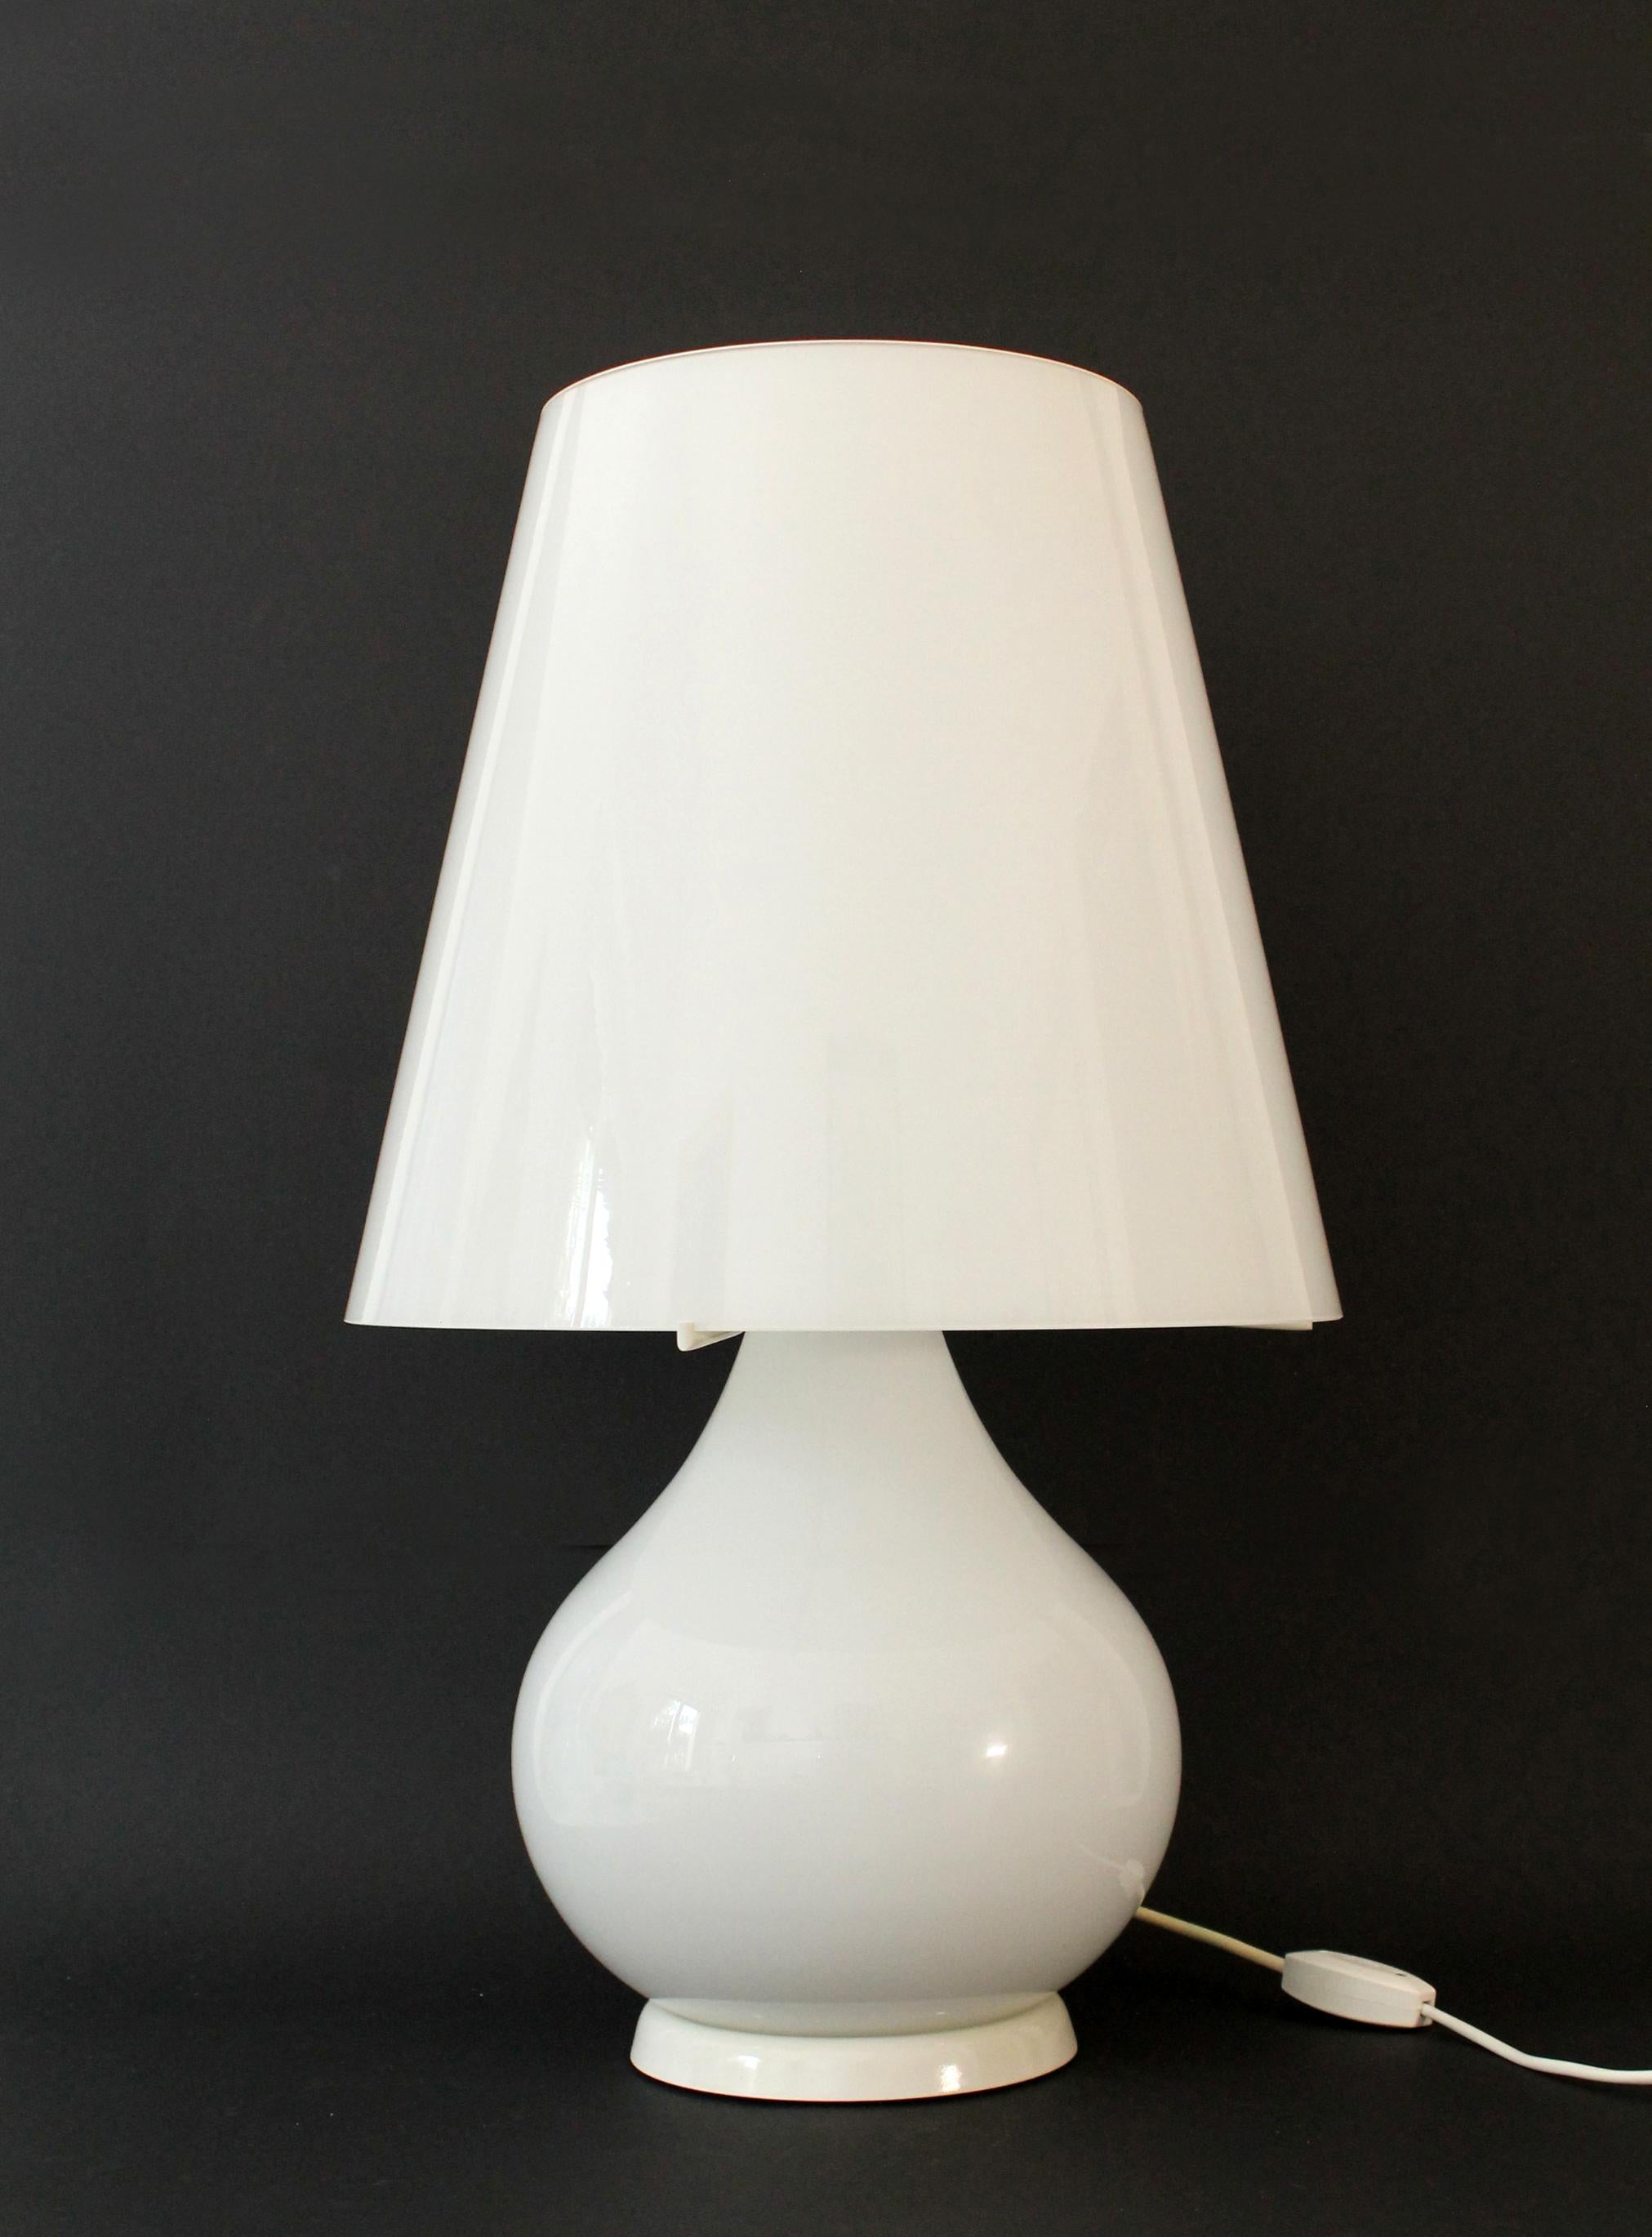 Italian LARGE retro décor Murano - 3 way table lamp by AV Mazzega (69hx40cm) Rare piece! For Sale